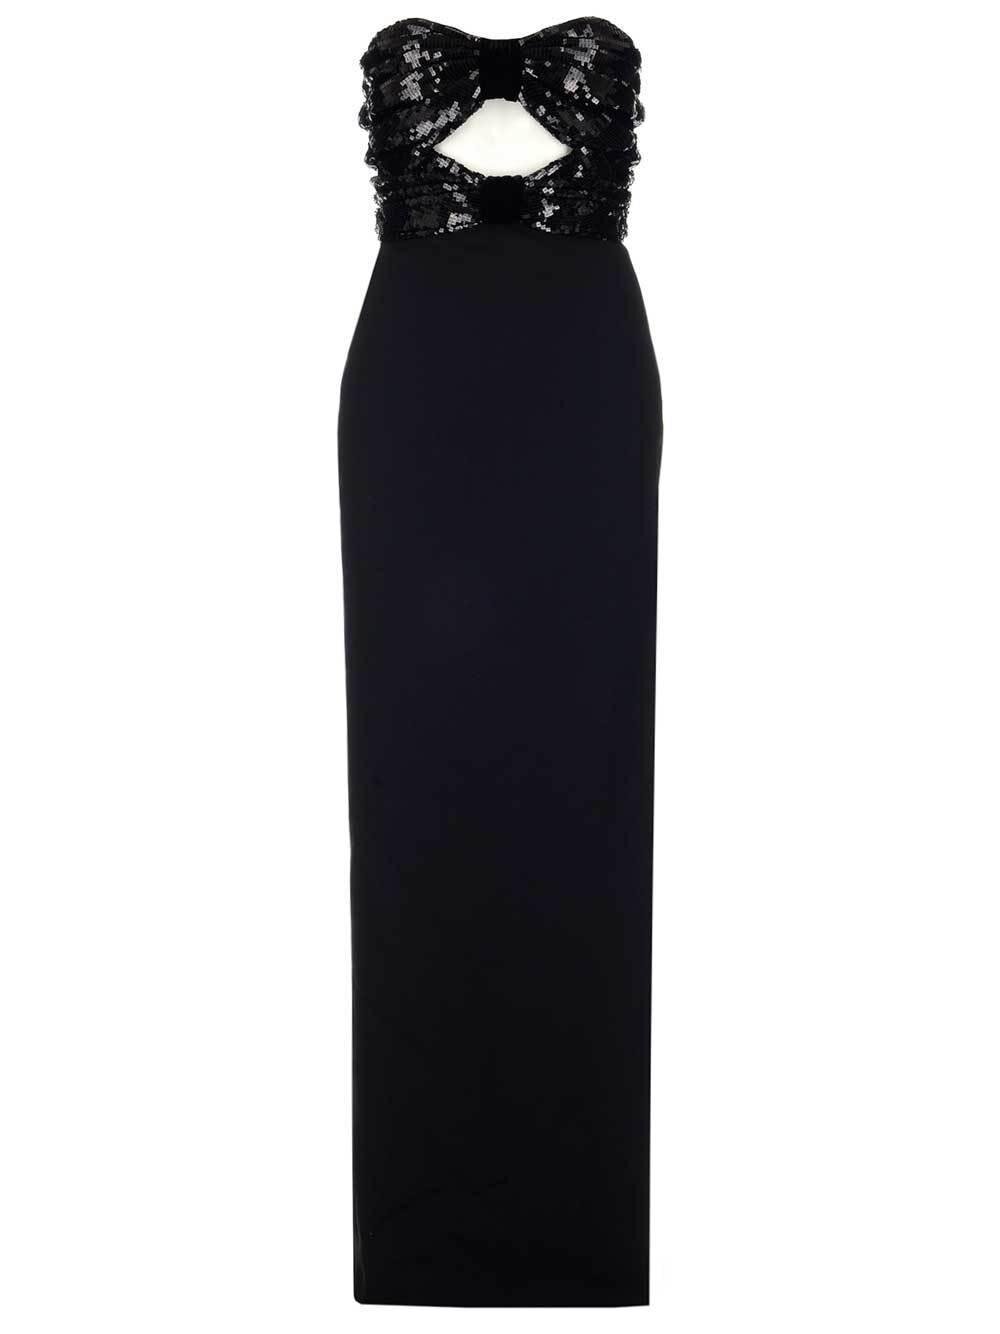 Saint Laurent Sequin-Embellished Evening Gown in Black and Pink.jpg